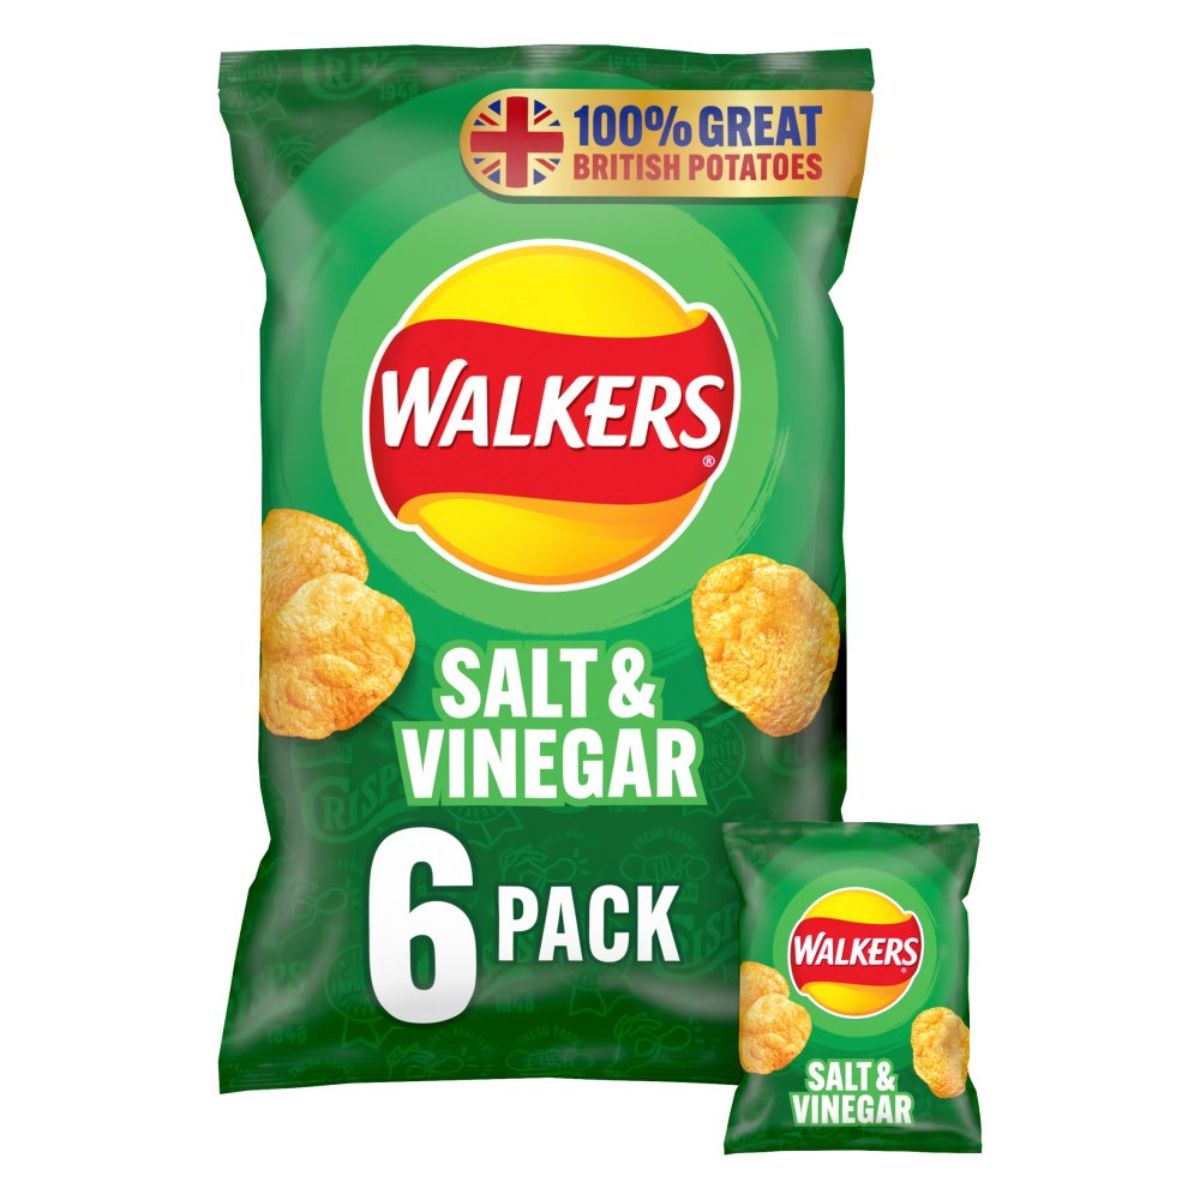 Walkers - Salt & Vinegar Multipack Crisps - 6x25g 6 pack.